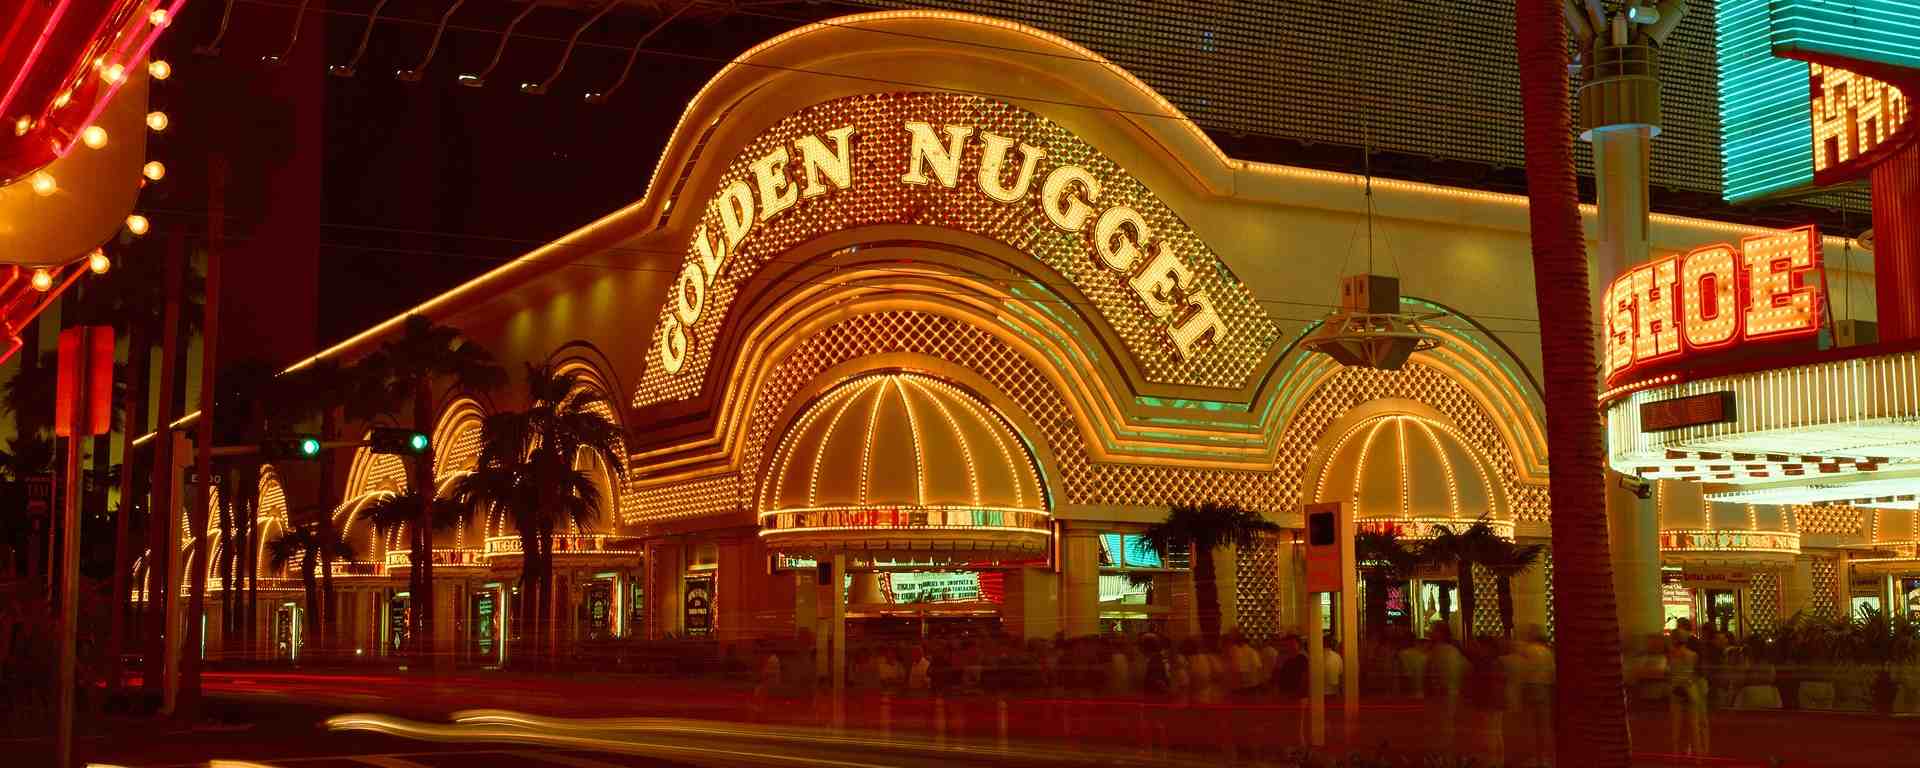 Golden Nugget Hotel Las Vegas Deals Promo Codes & Discounts